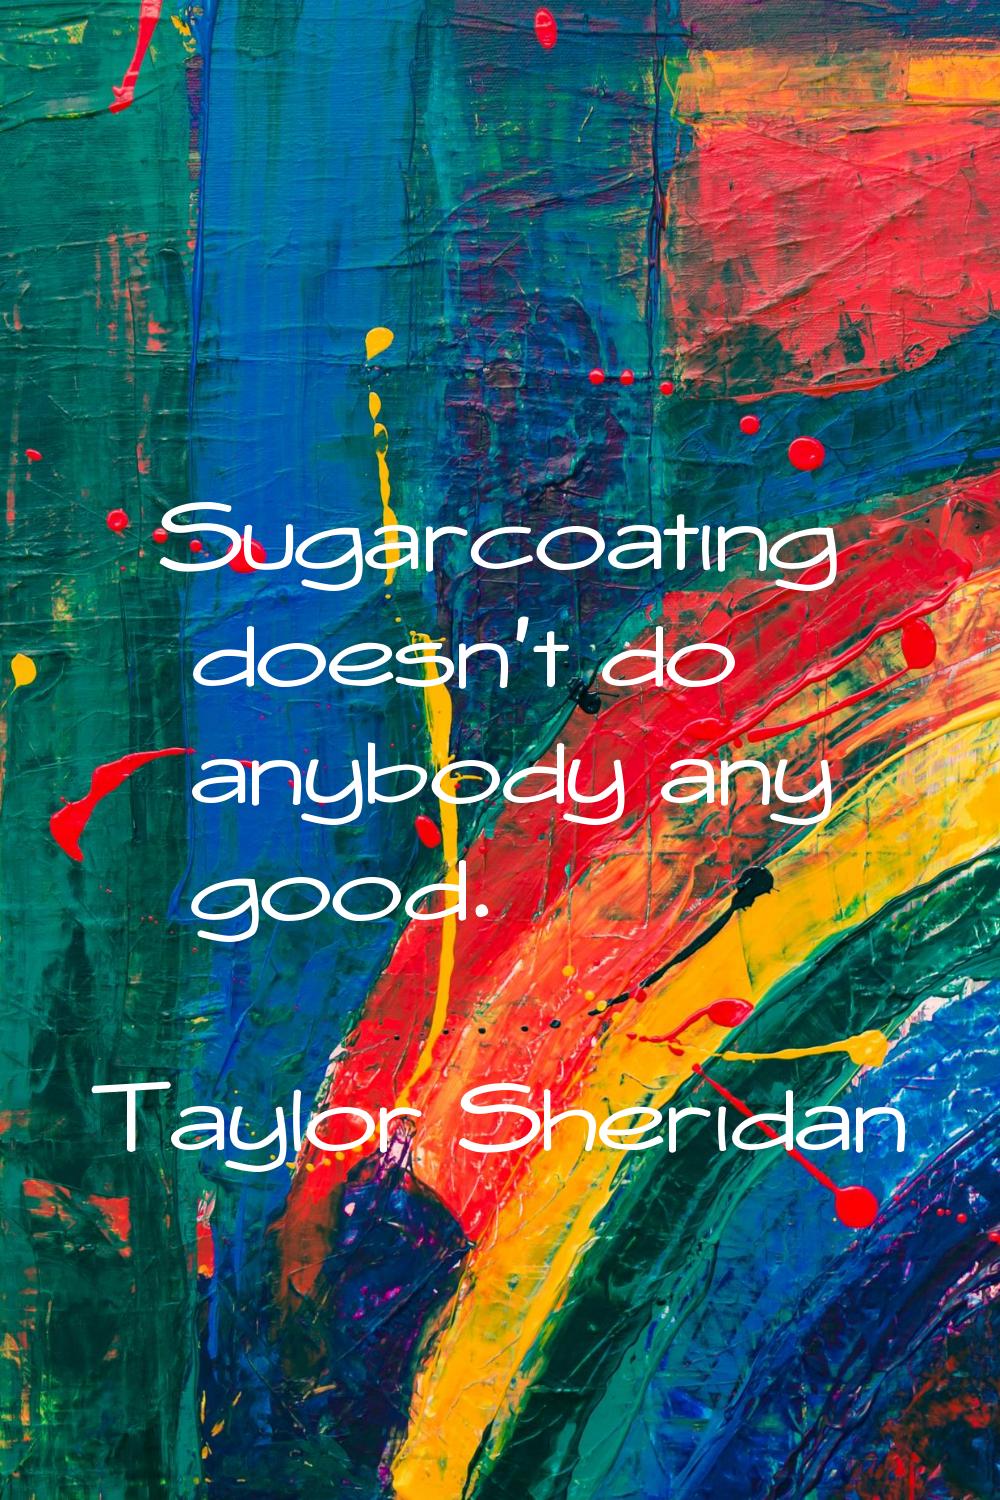 Sugarcoating doesn't do anybody any good.